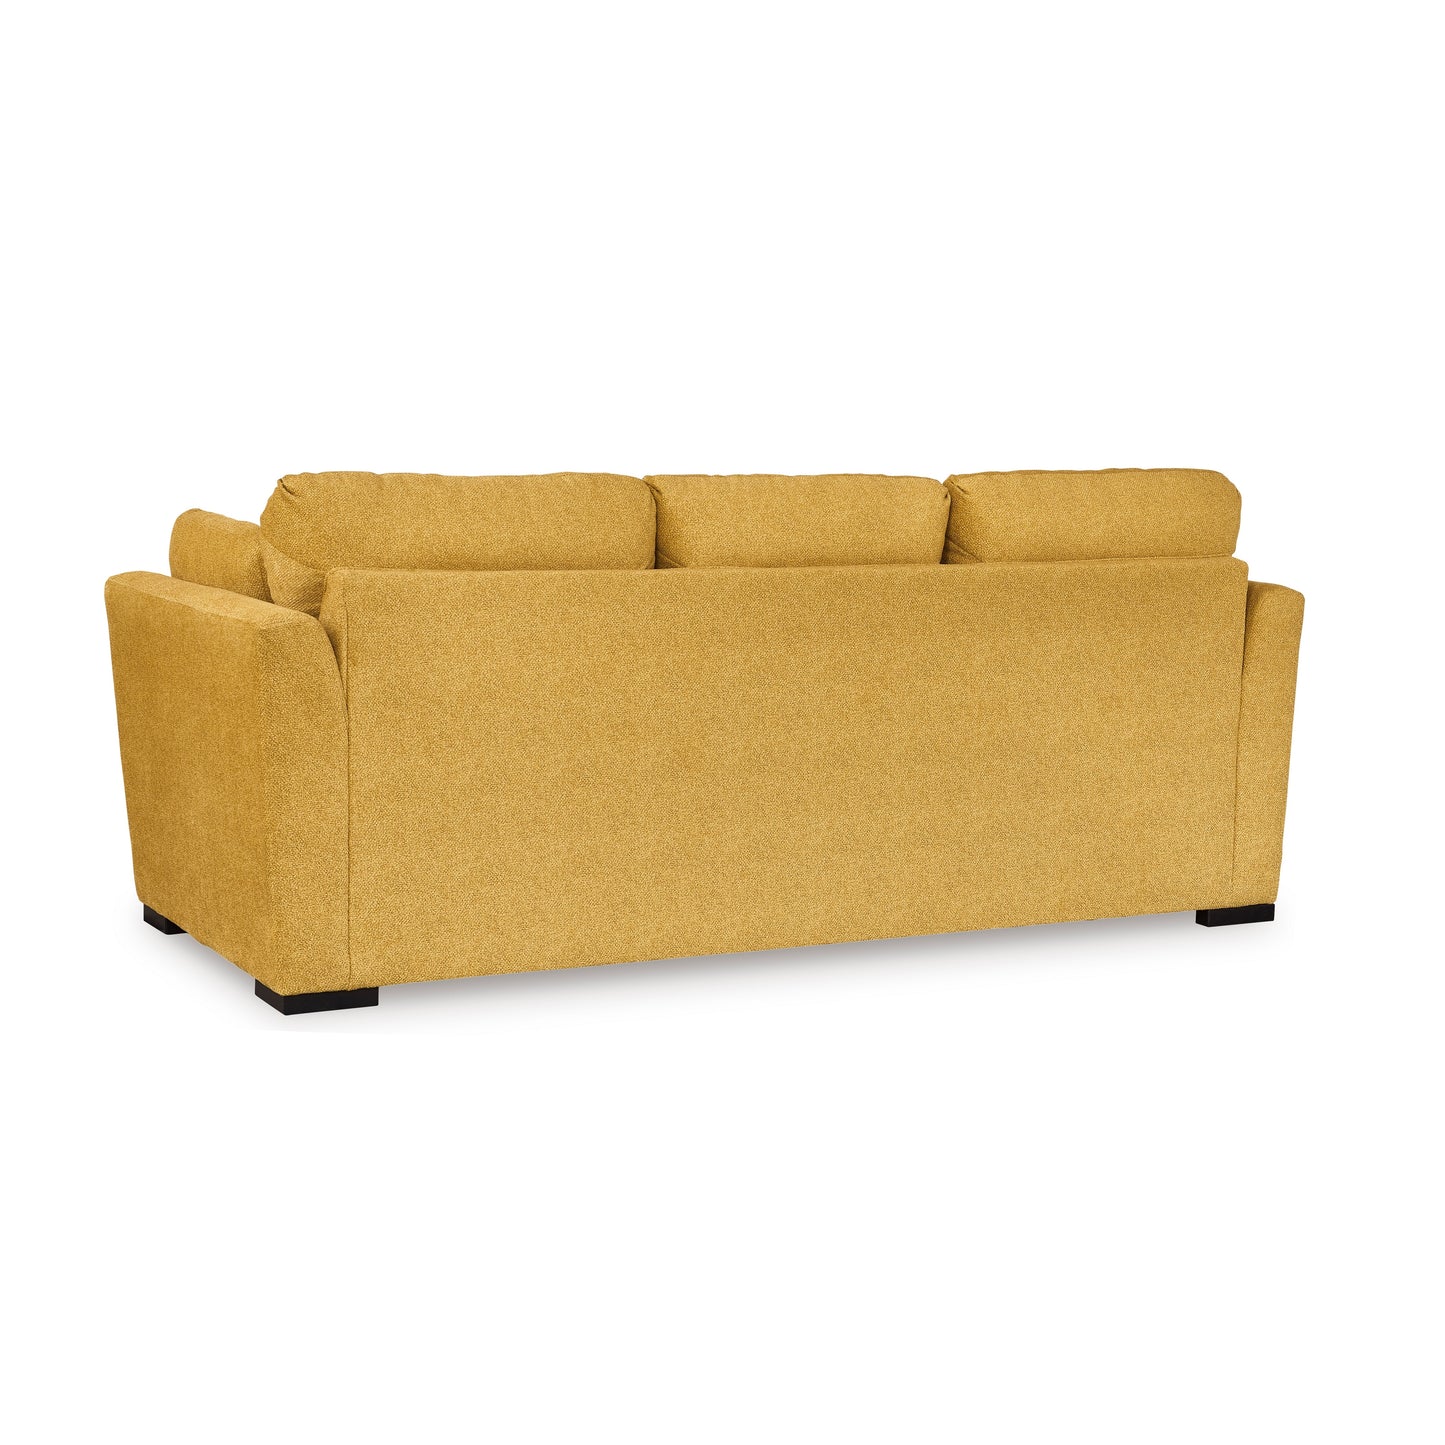 Clareen Upholstered Stationary Sofa